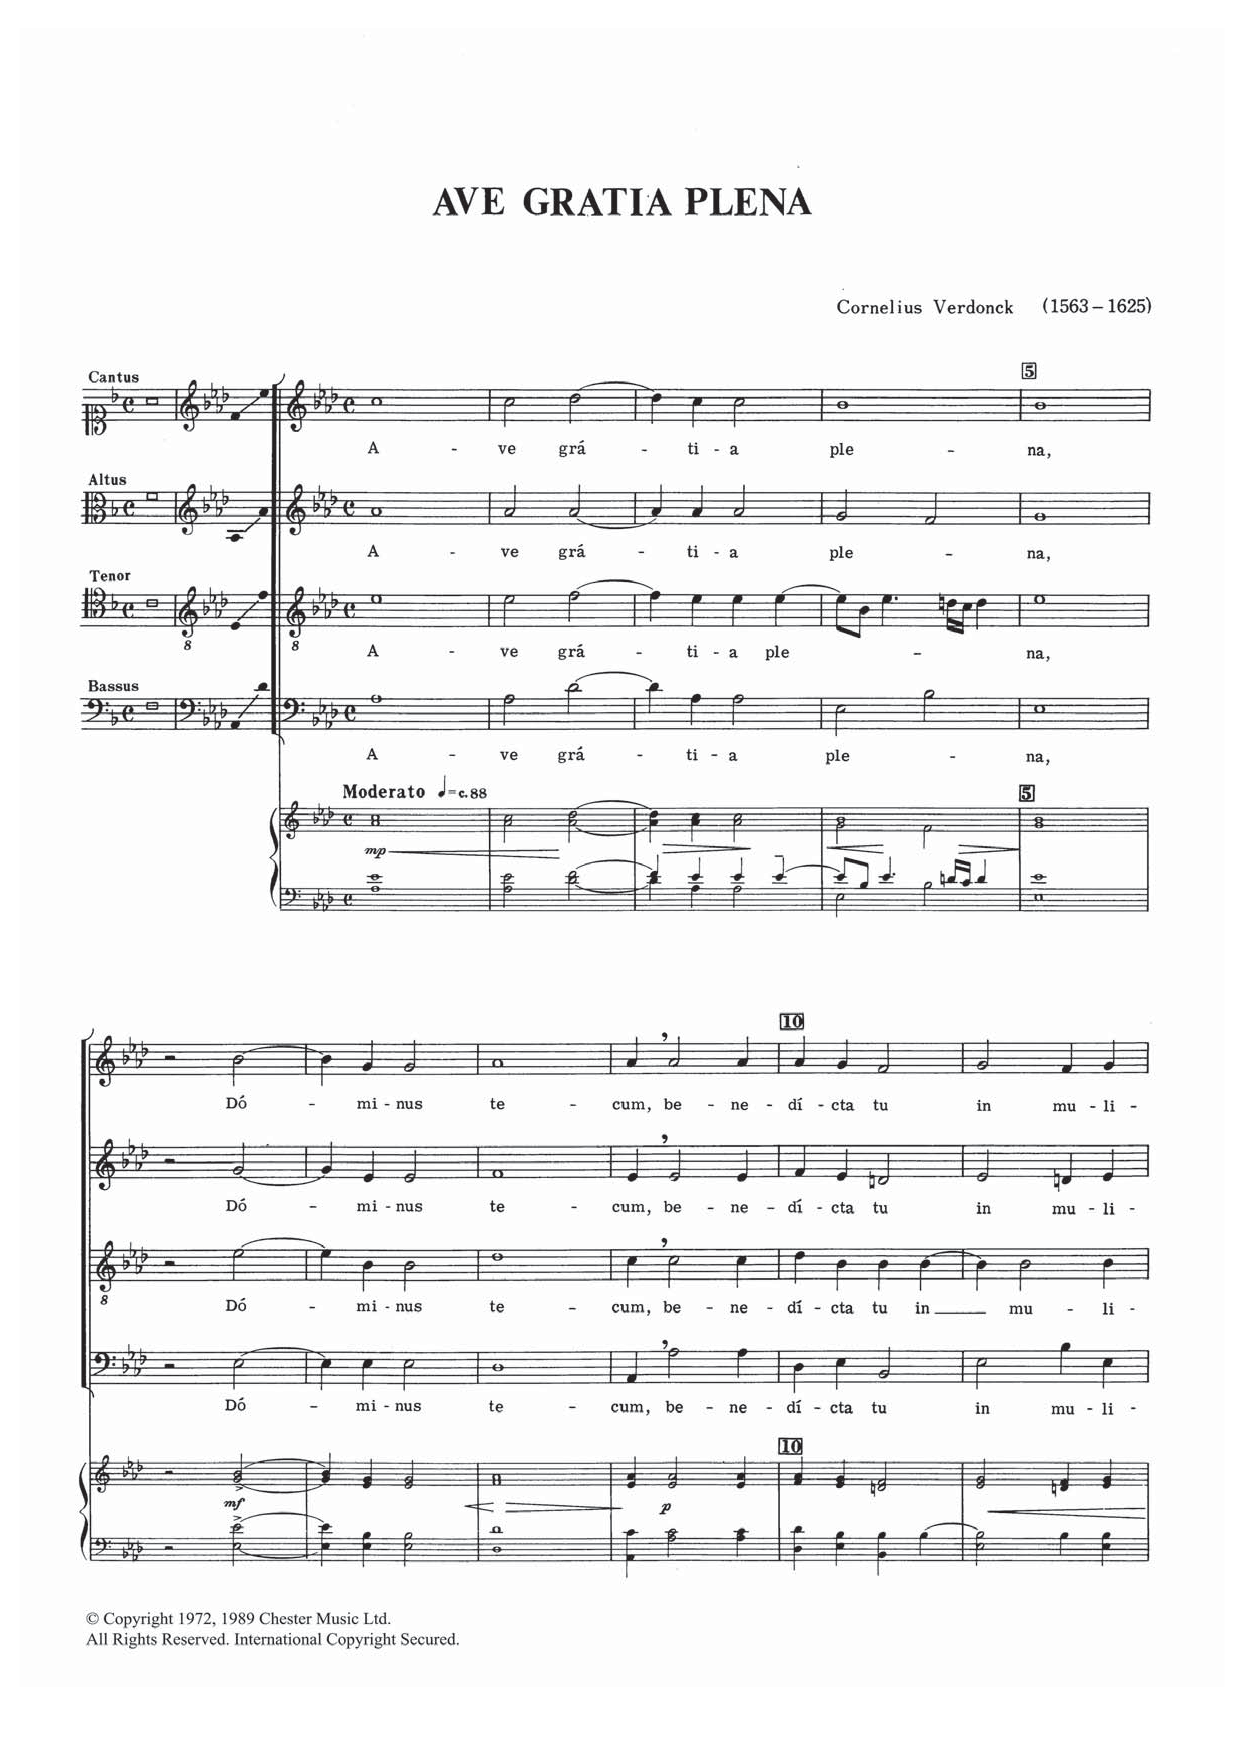 Cornelis Verdonck Ave Gratia Plena sheet music notes and chords arranged for SATB Choir